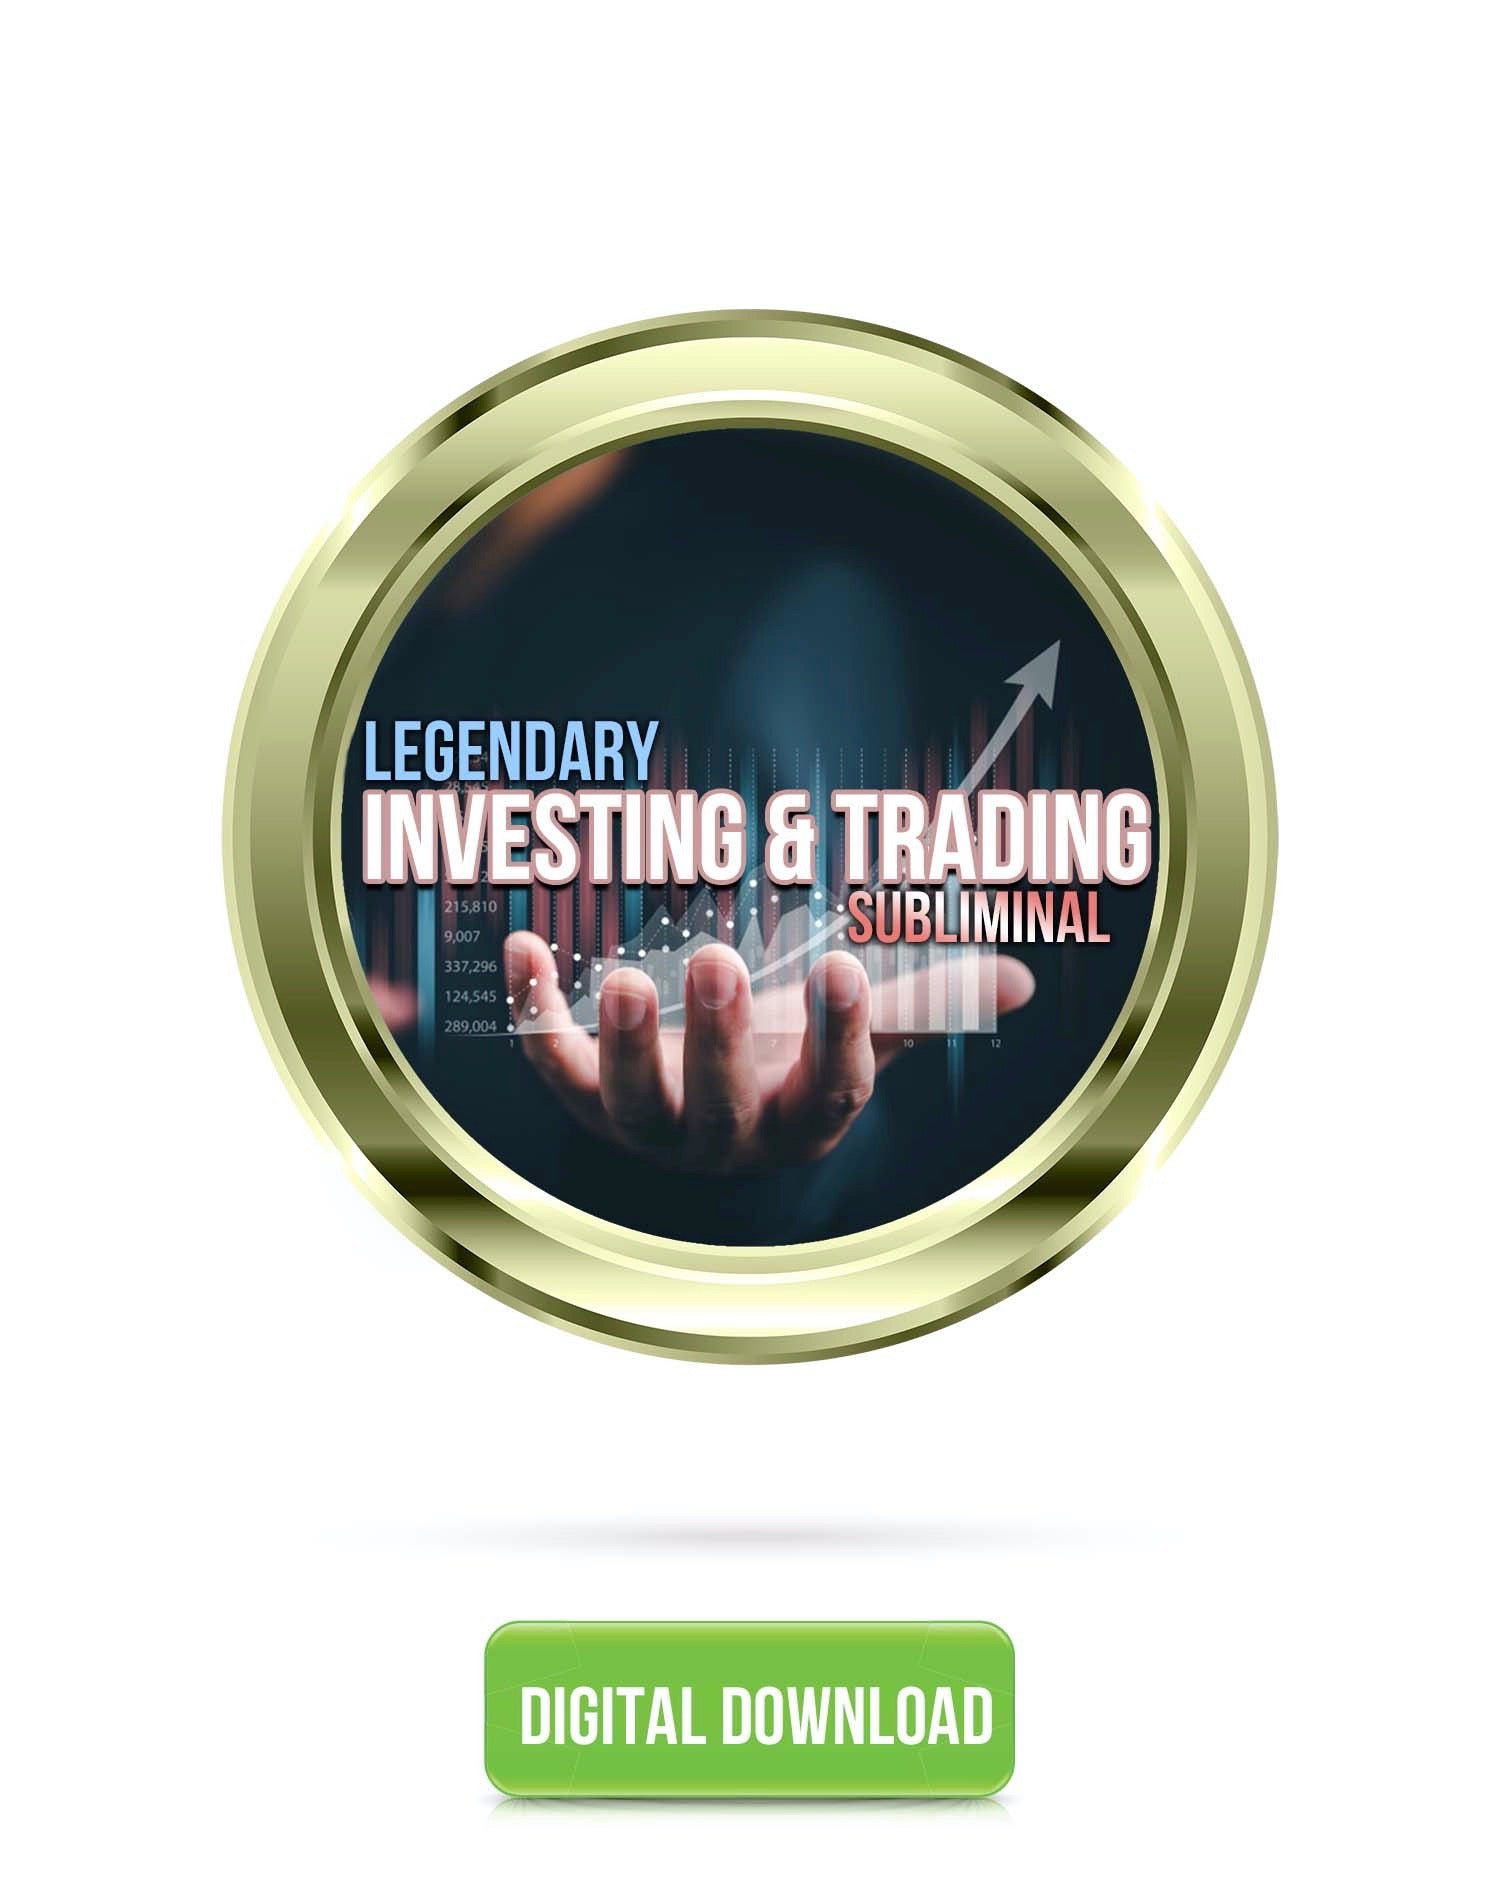 Legendary Trading & Investing Subliminal Audio | Crypto, Stock/Forex Market, Finance